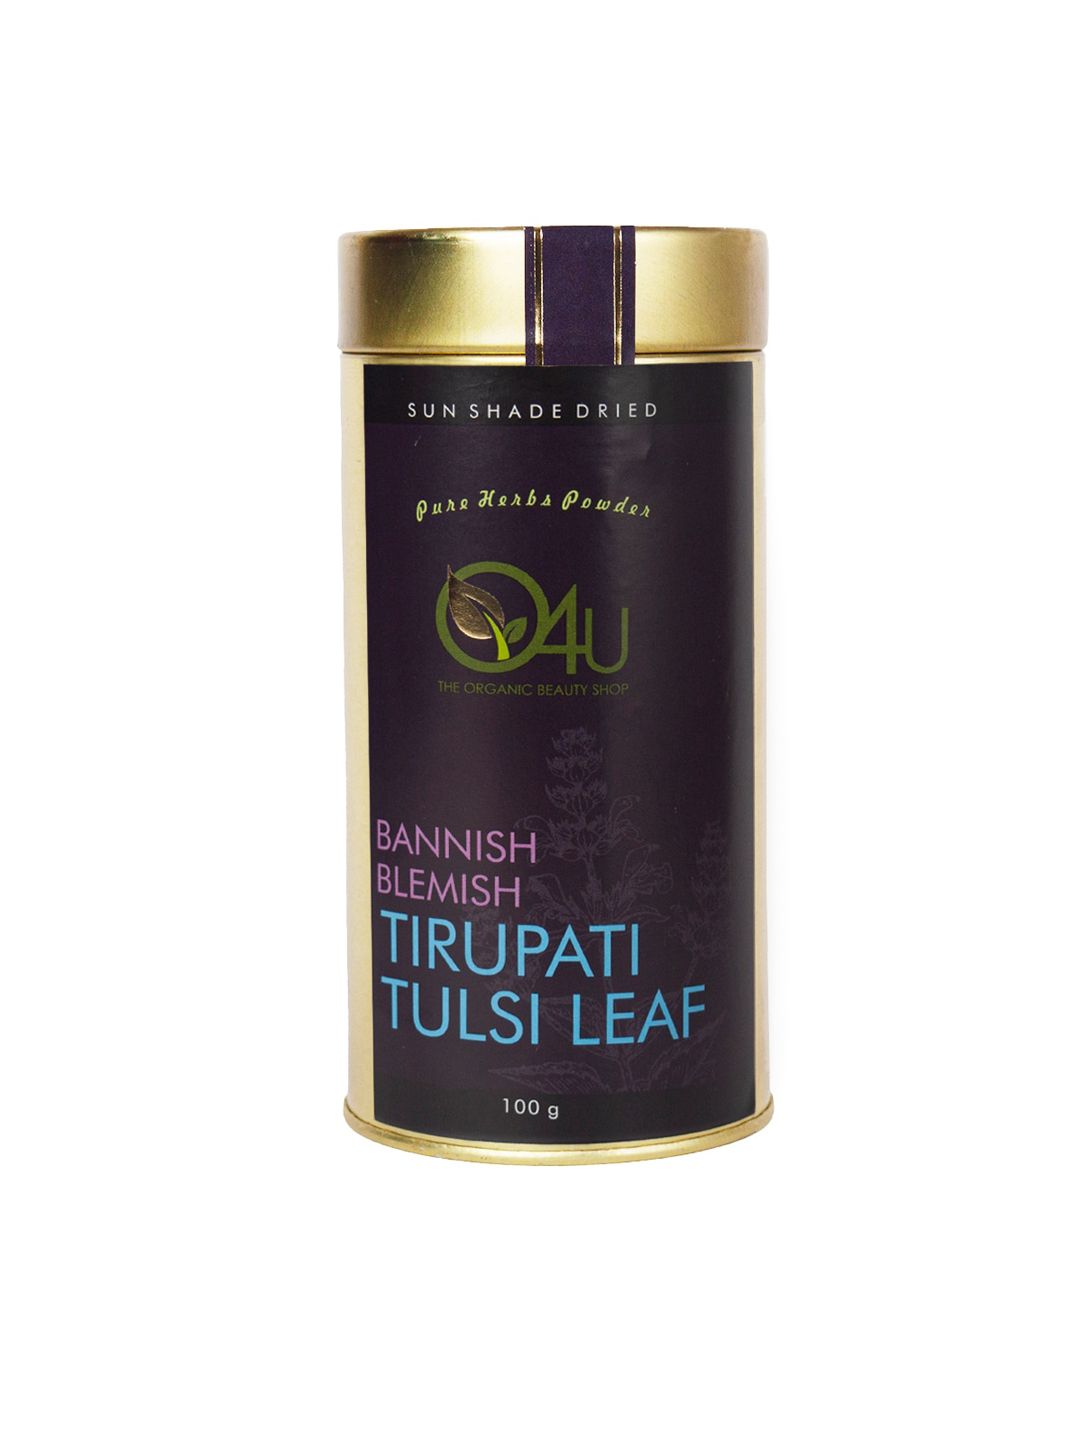 O4U Bannish Blemish Tirupati Tulsi Leaf Powder - Oil Balance, Acne & Dandruff Control 100g Price in India